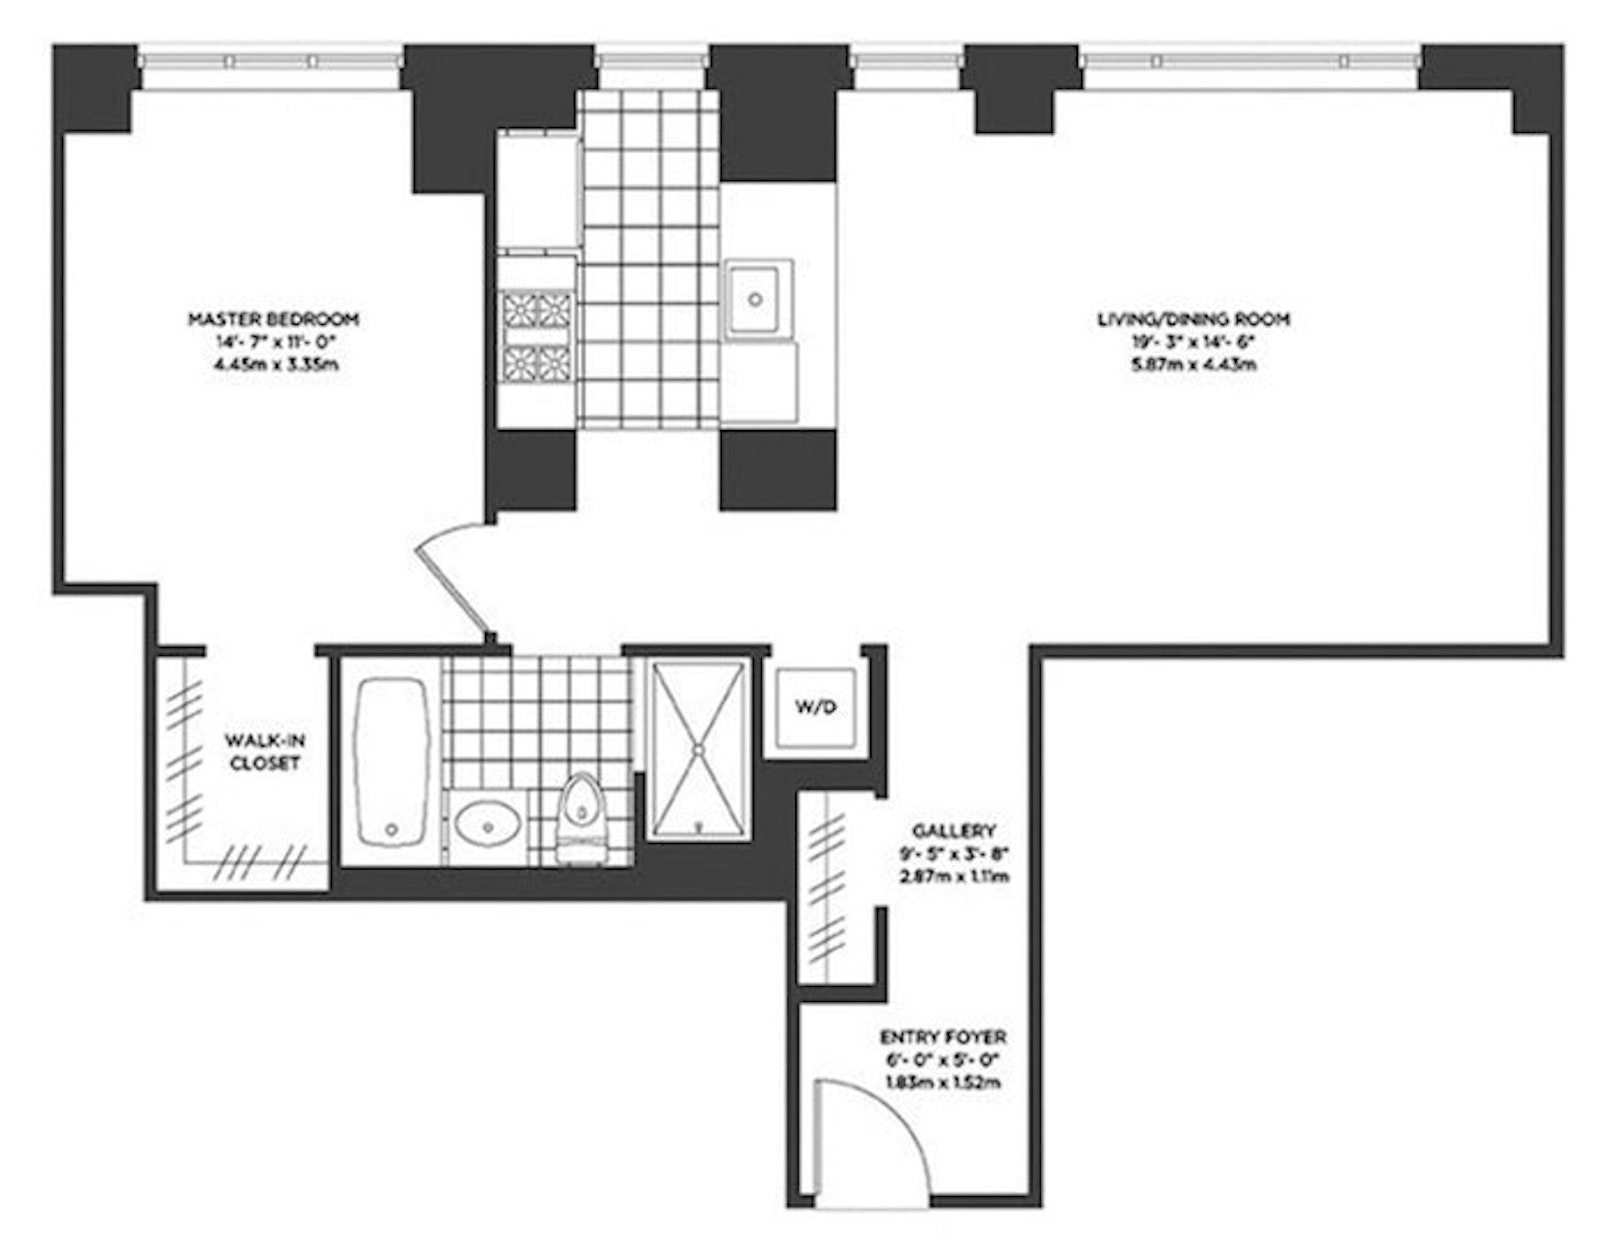 Floorplan for 205 West 76th Street, 603